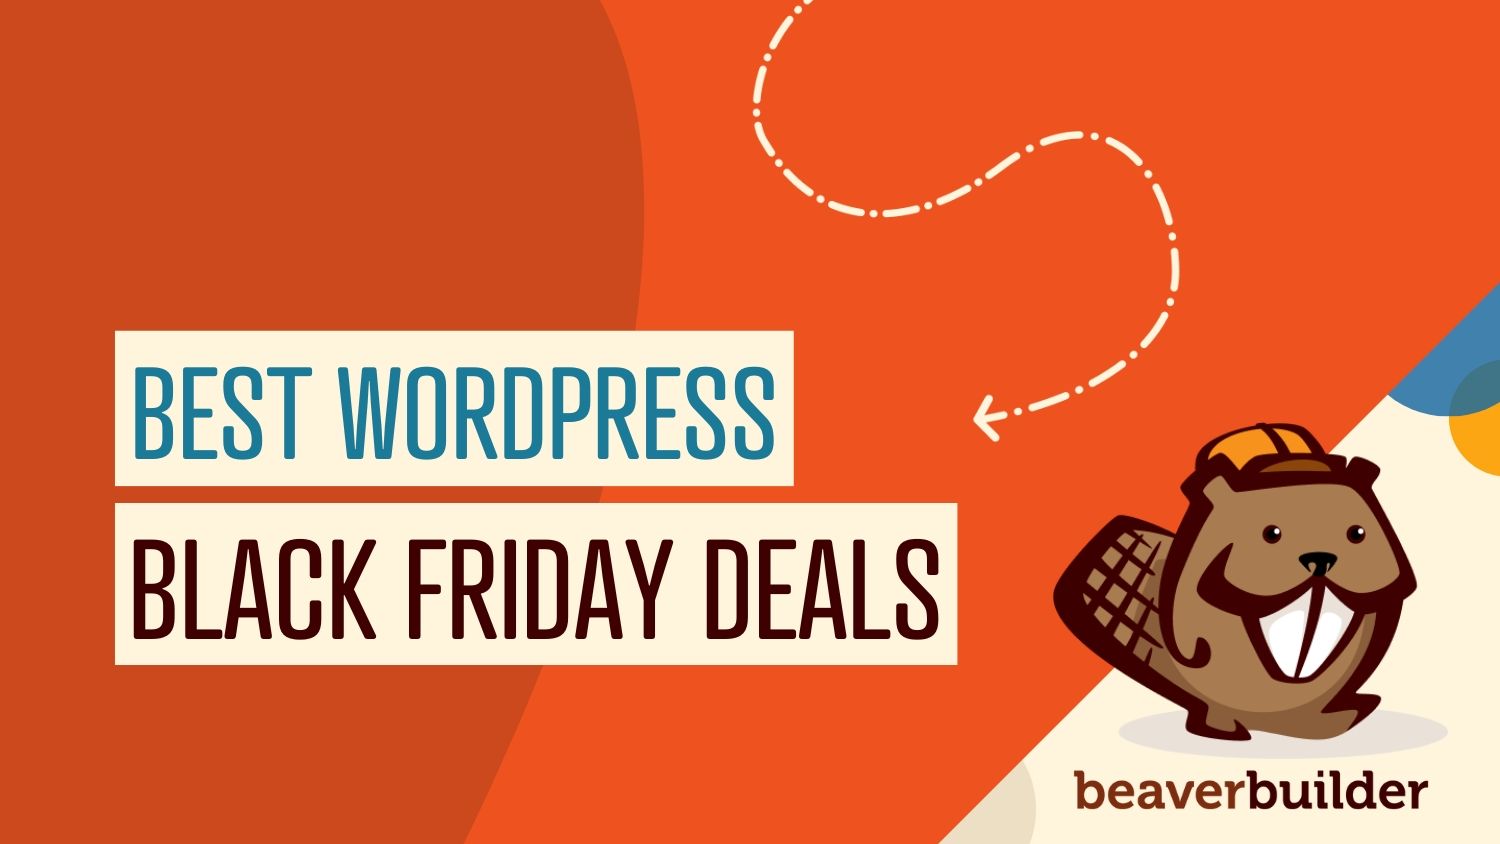 Best WordPress Black Friday deals